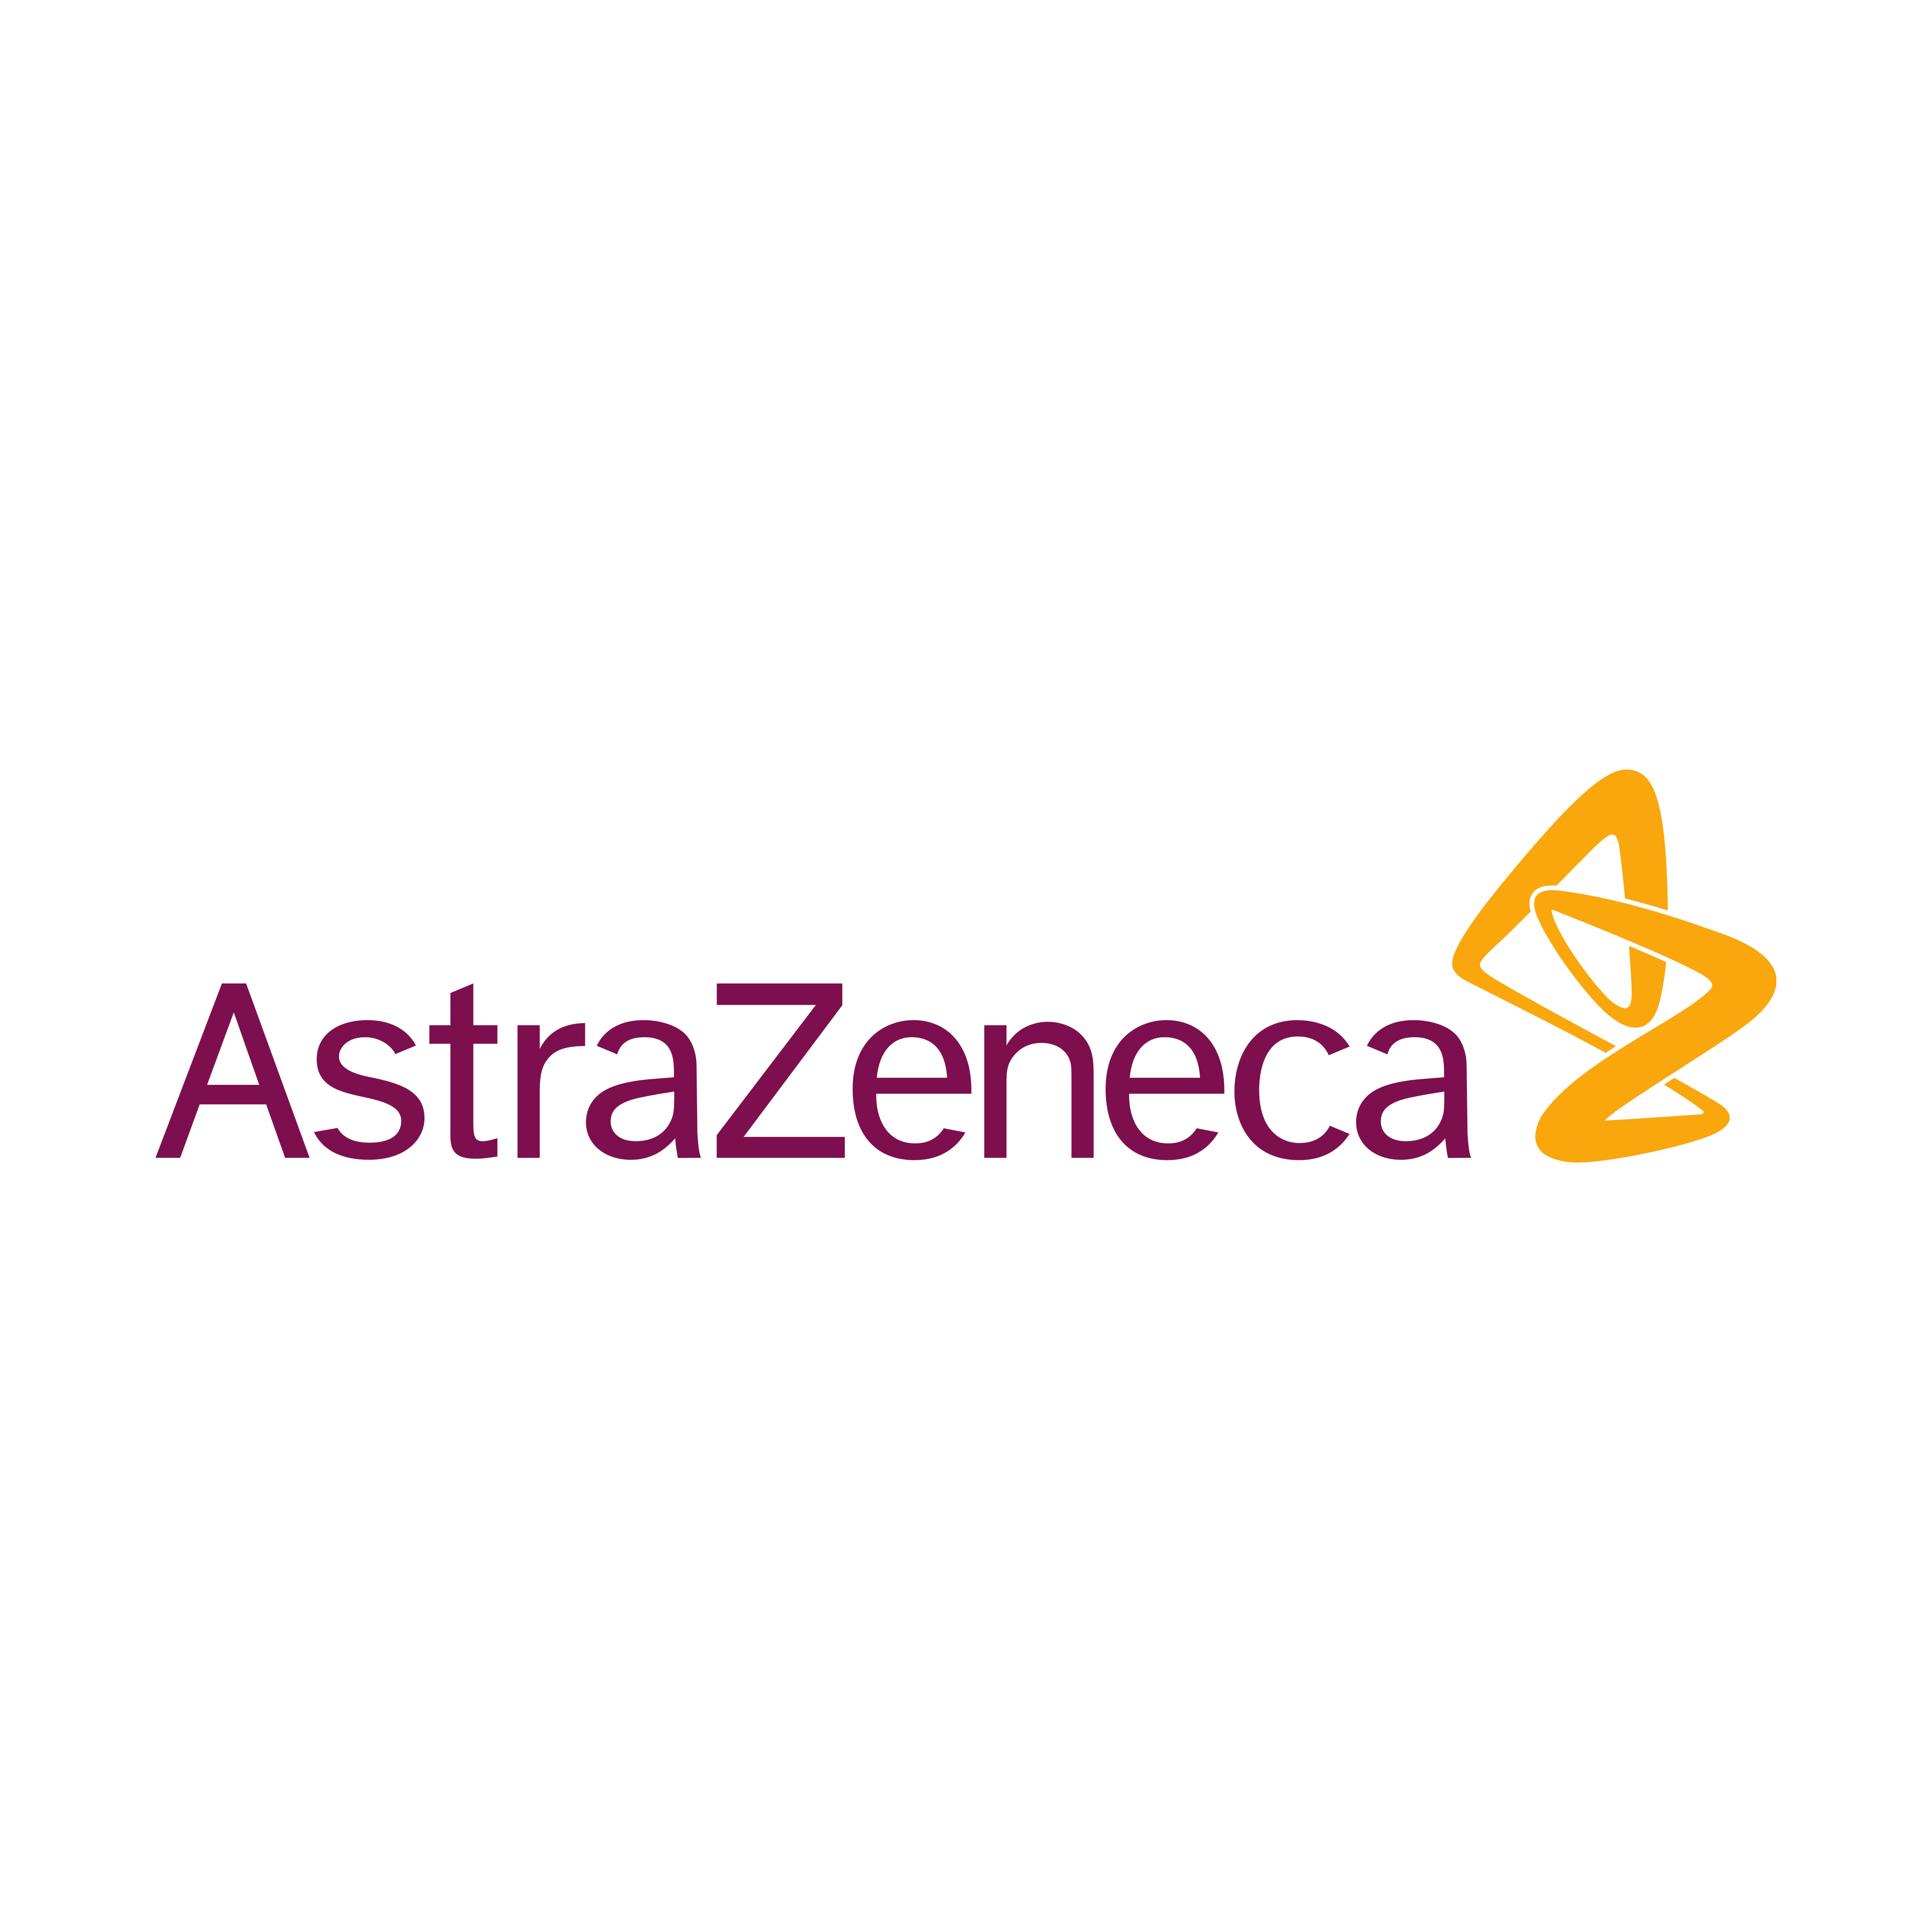 astrazeneca logo 0 - AstraZeneca Logo